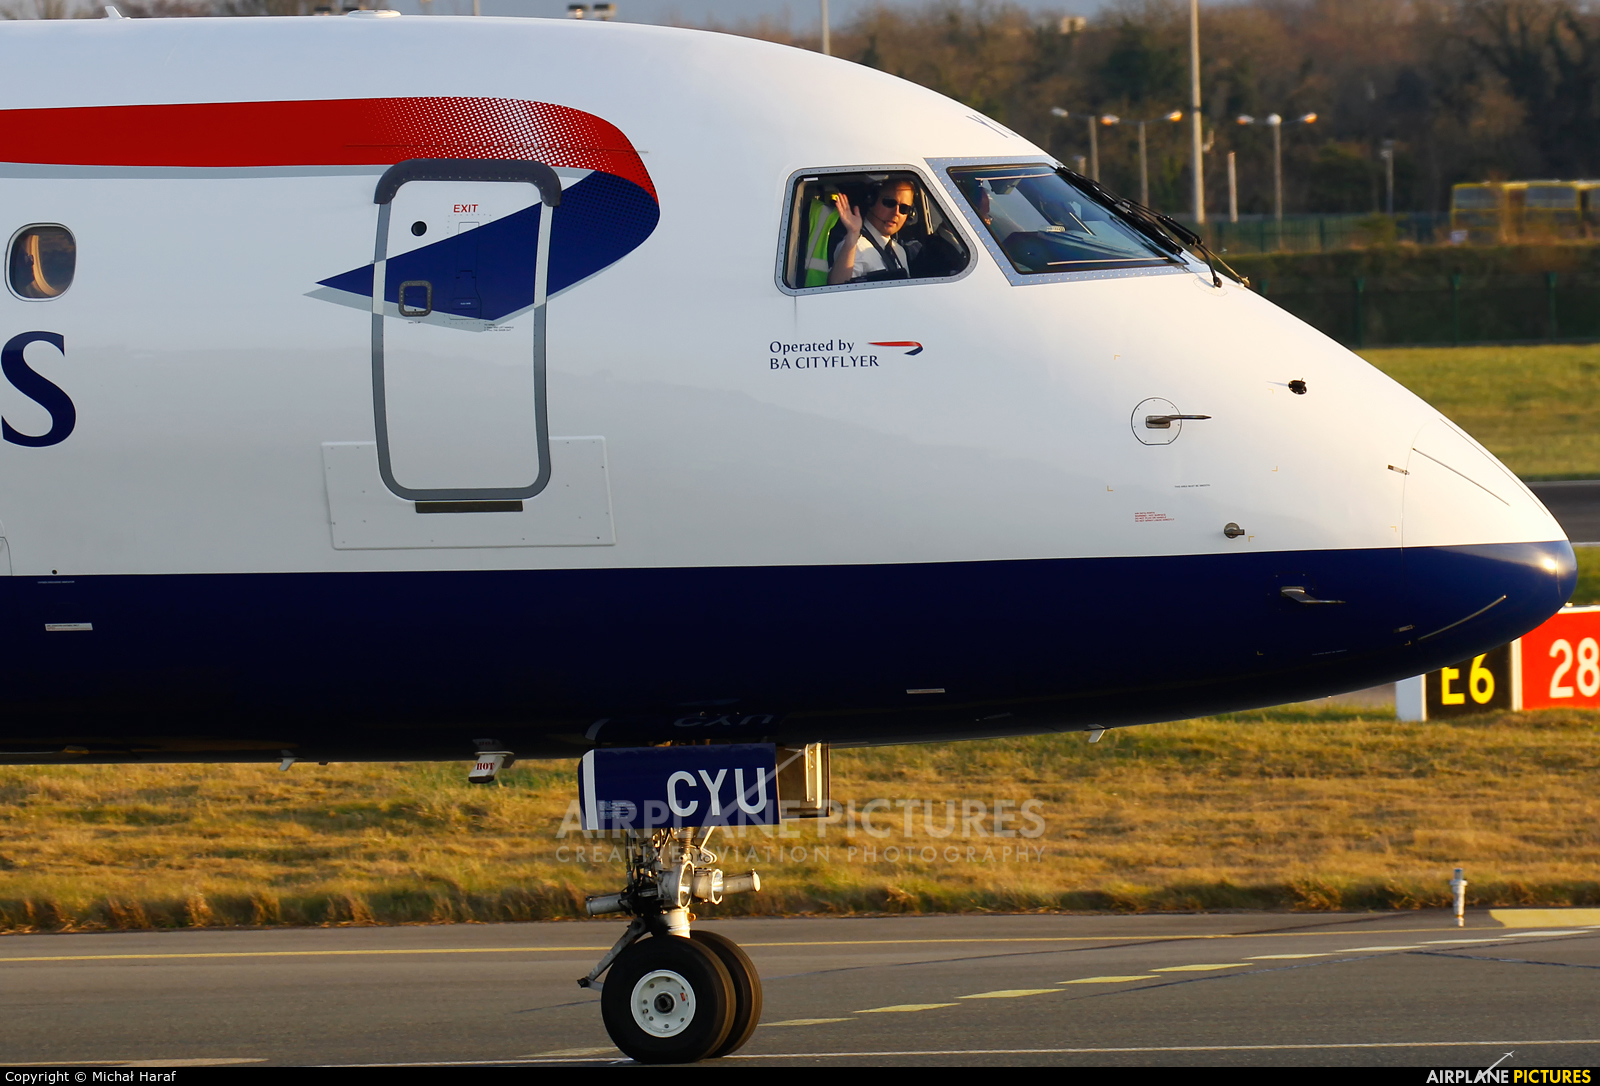 British Airways - City Flyer G-LCYU aircraft at Dublin